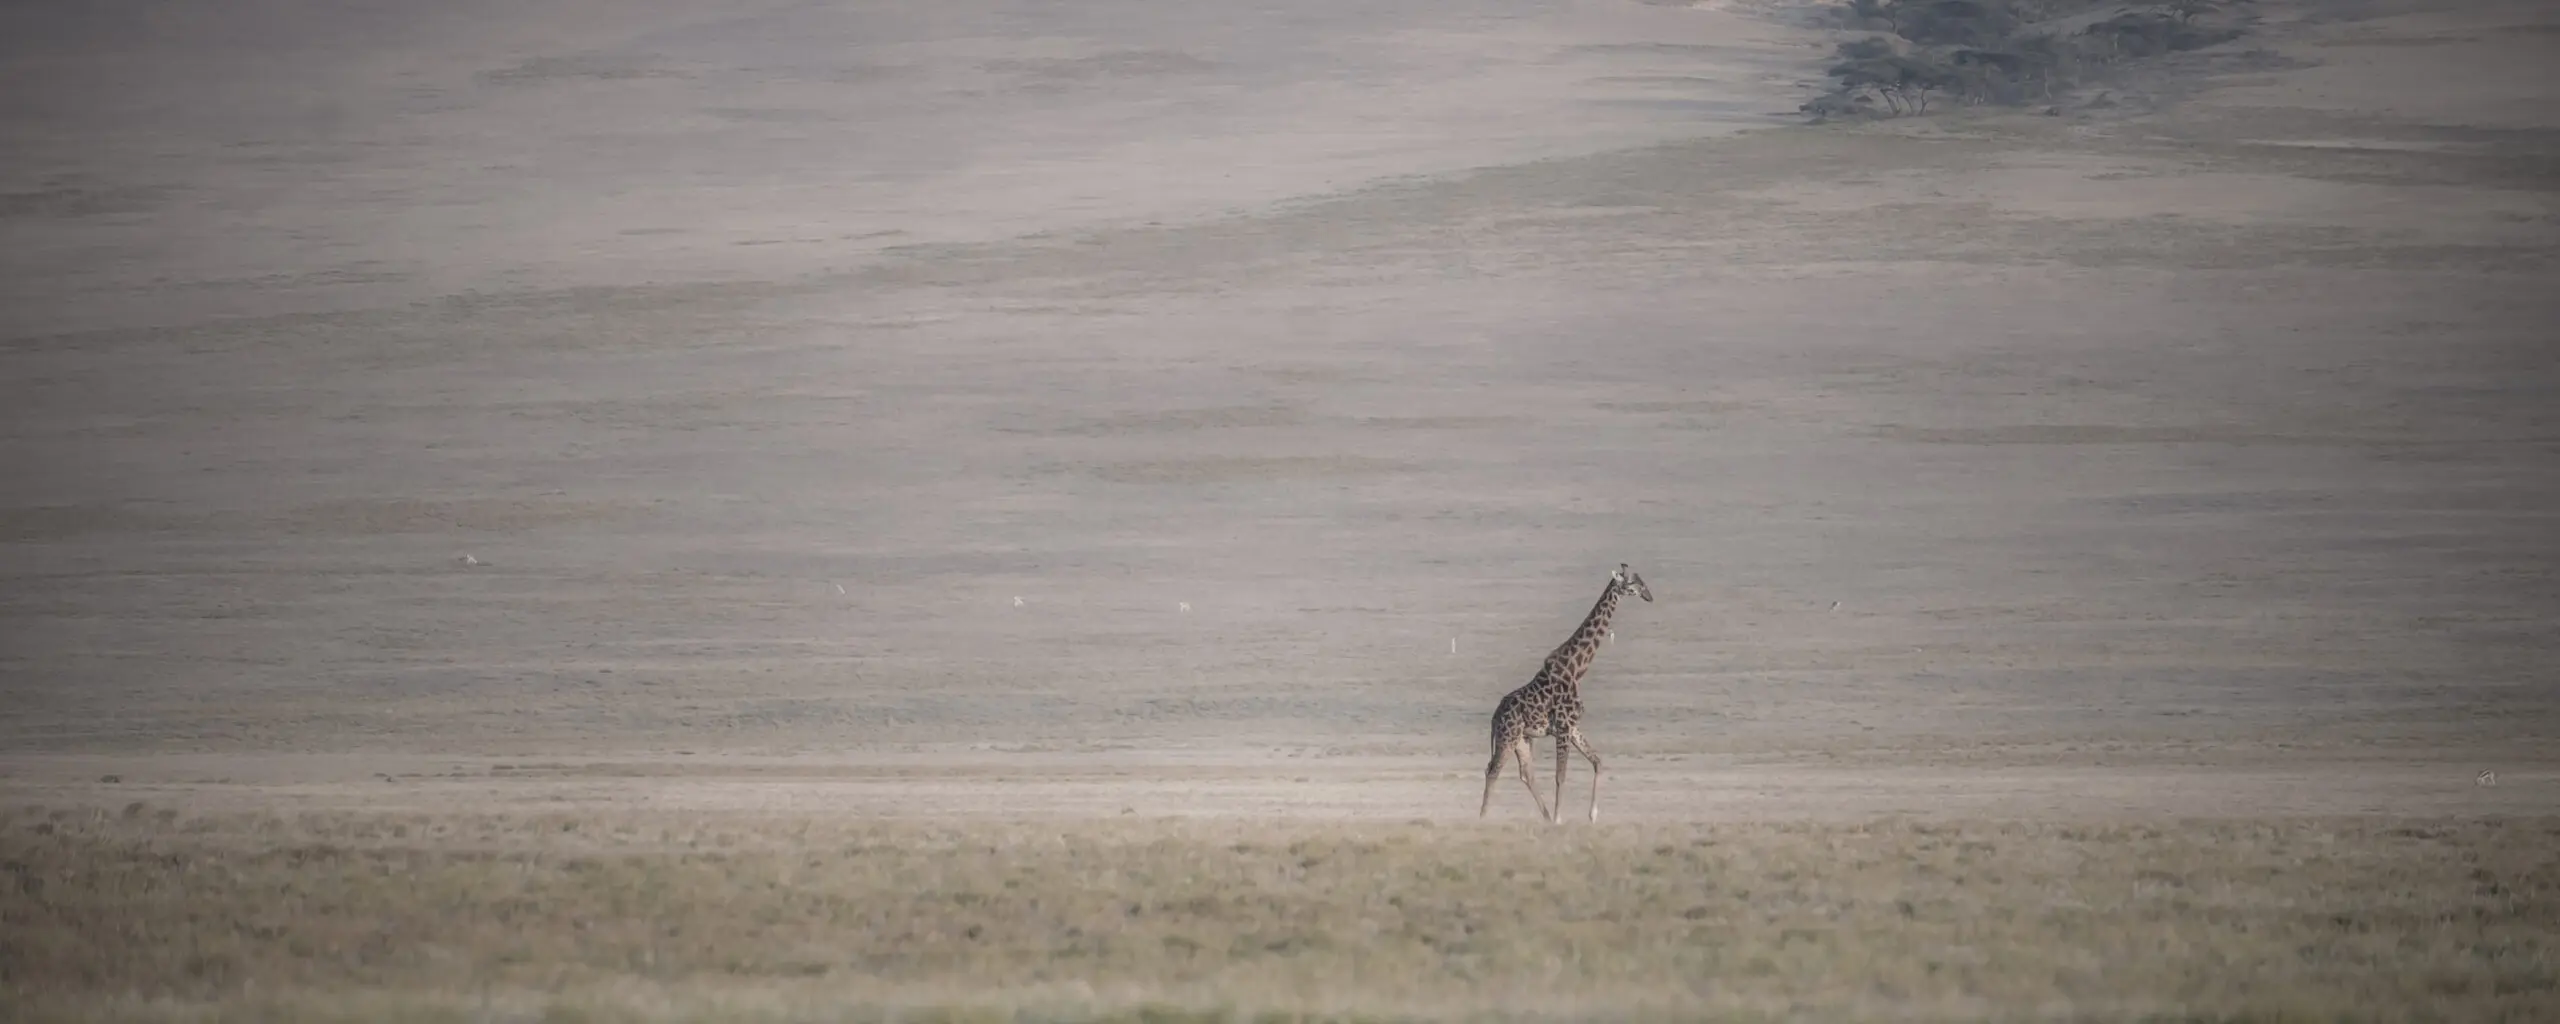 Wandbild (3170) Lonely Giraffe präsentiert: Tiere,Natur,Landschaften,Afrika,Sonstige Tiere,Wildtiere,Aus Afrika